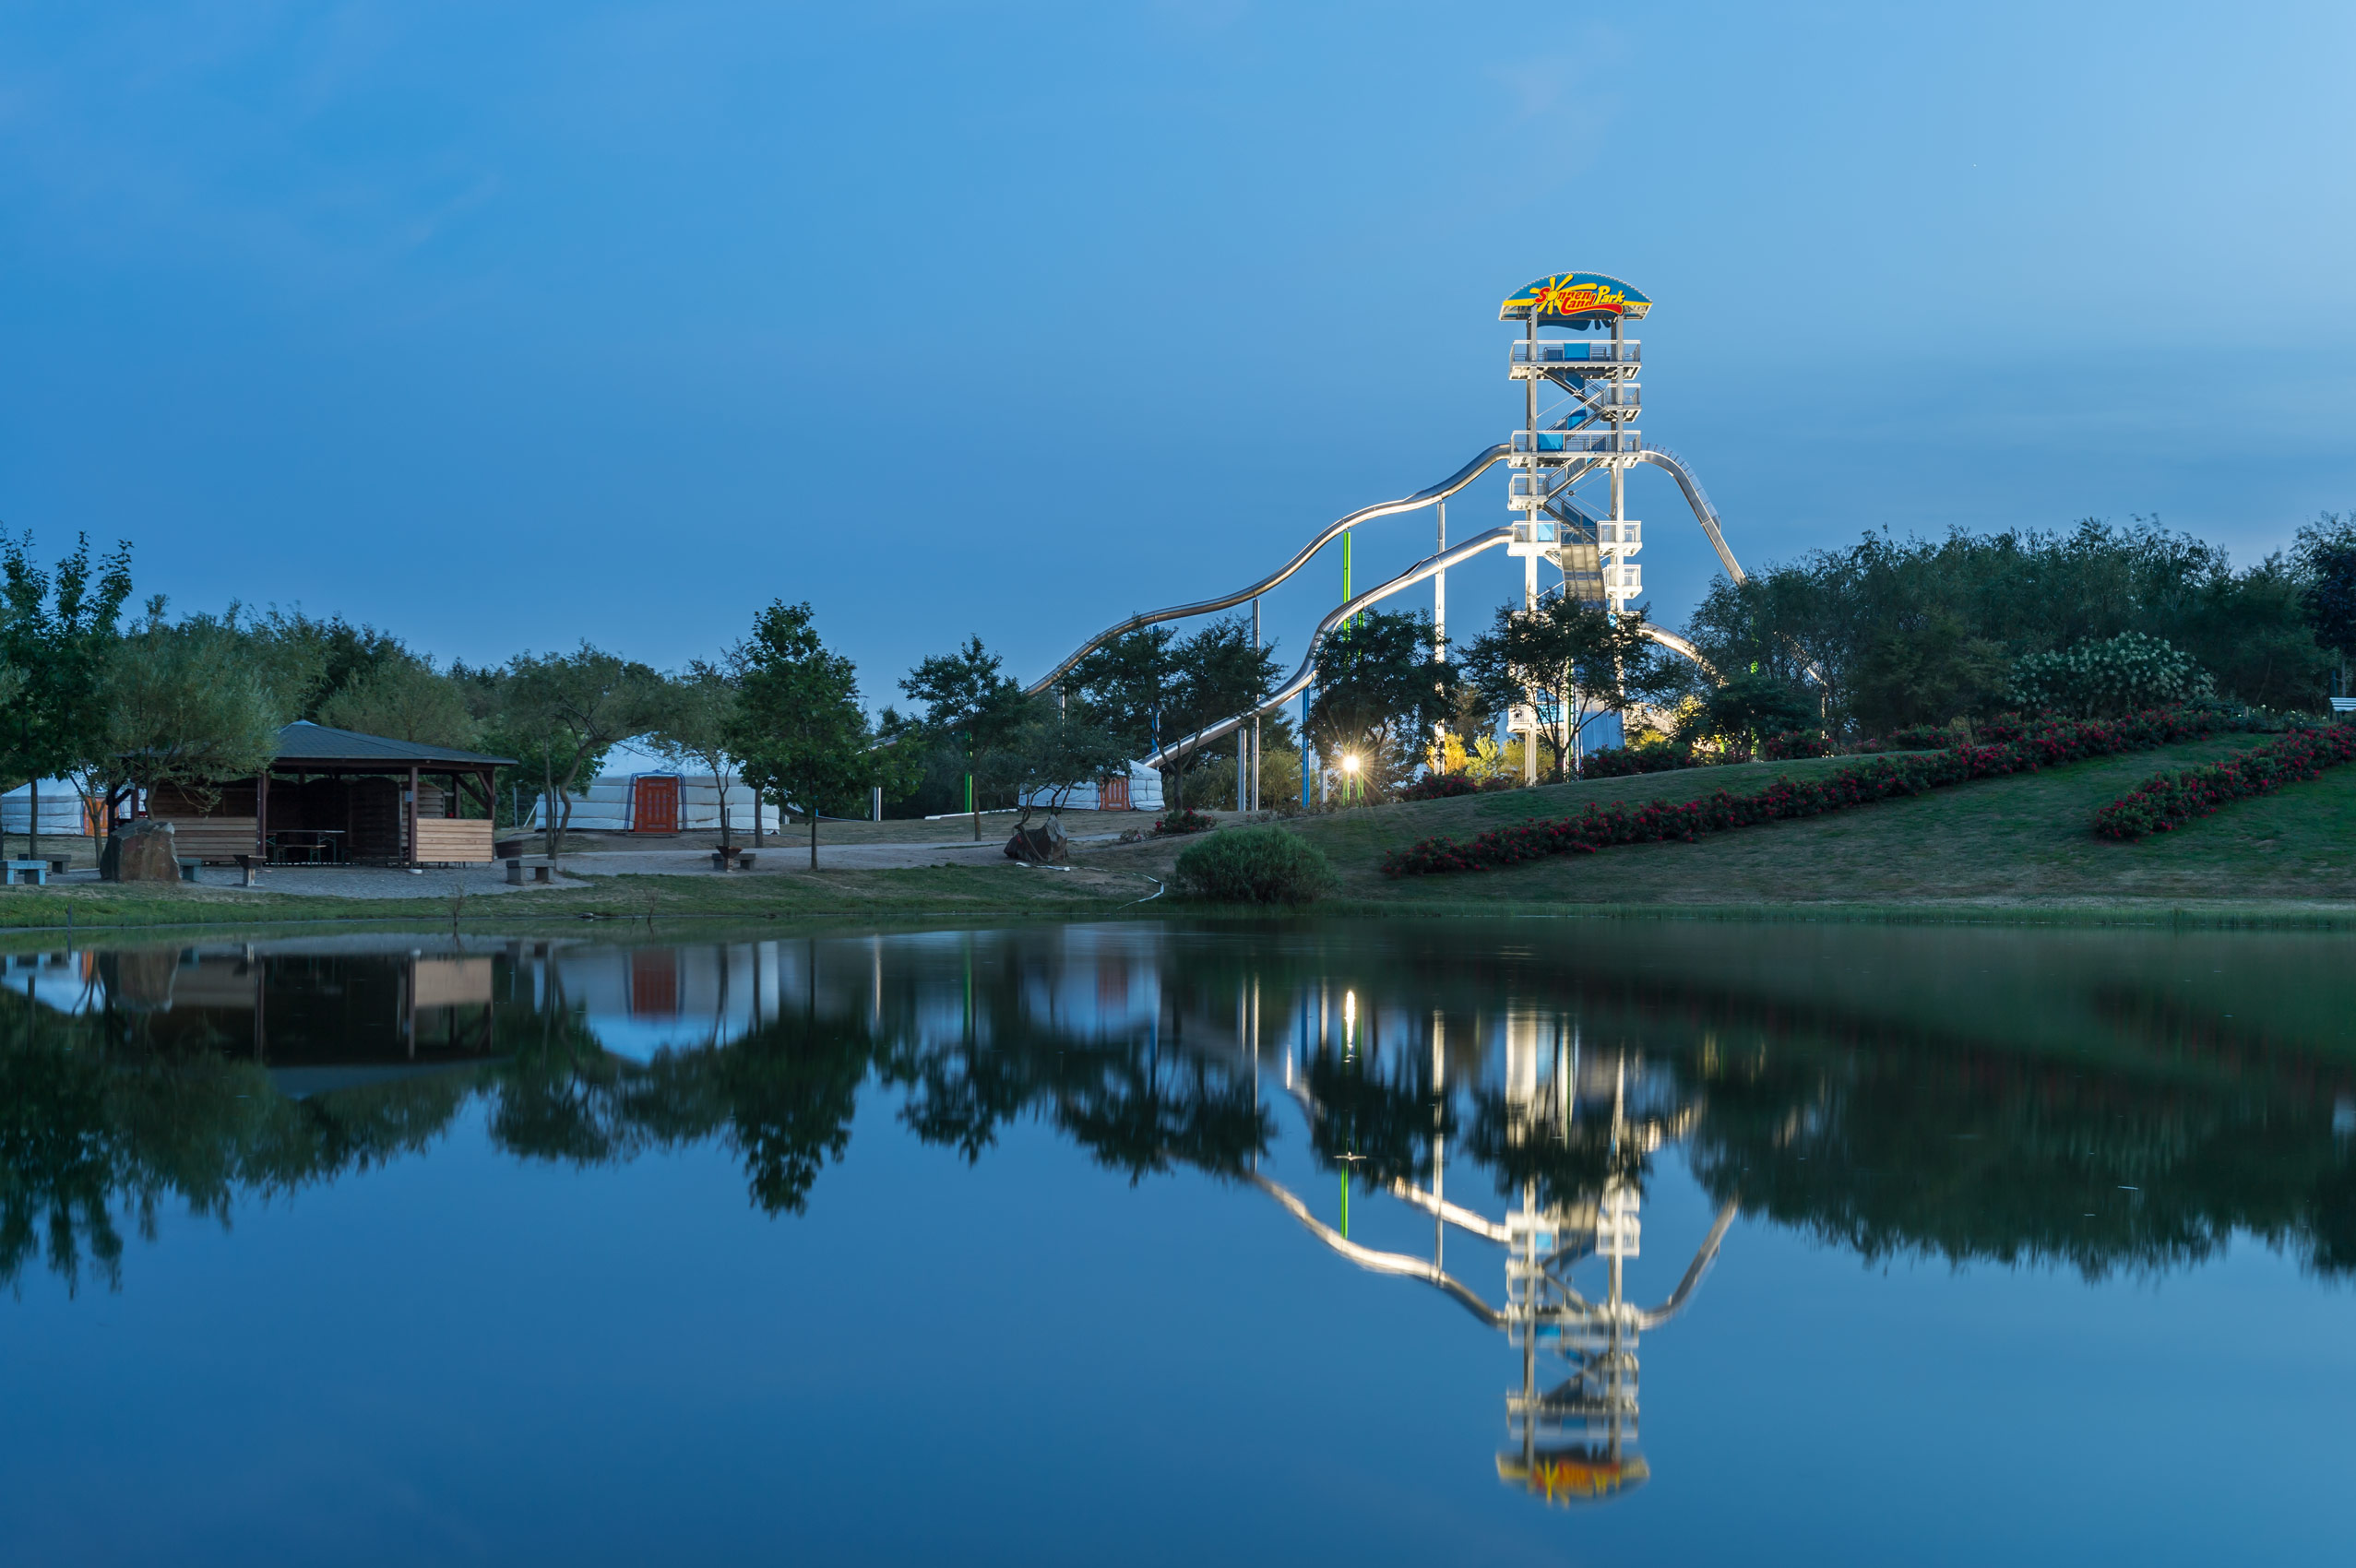 atlantics stainless steel slides sonnenlandpark lichtenau saxony amusement parks 178313DSC5746